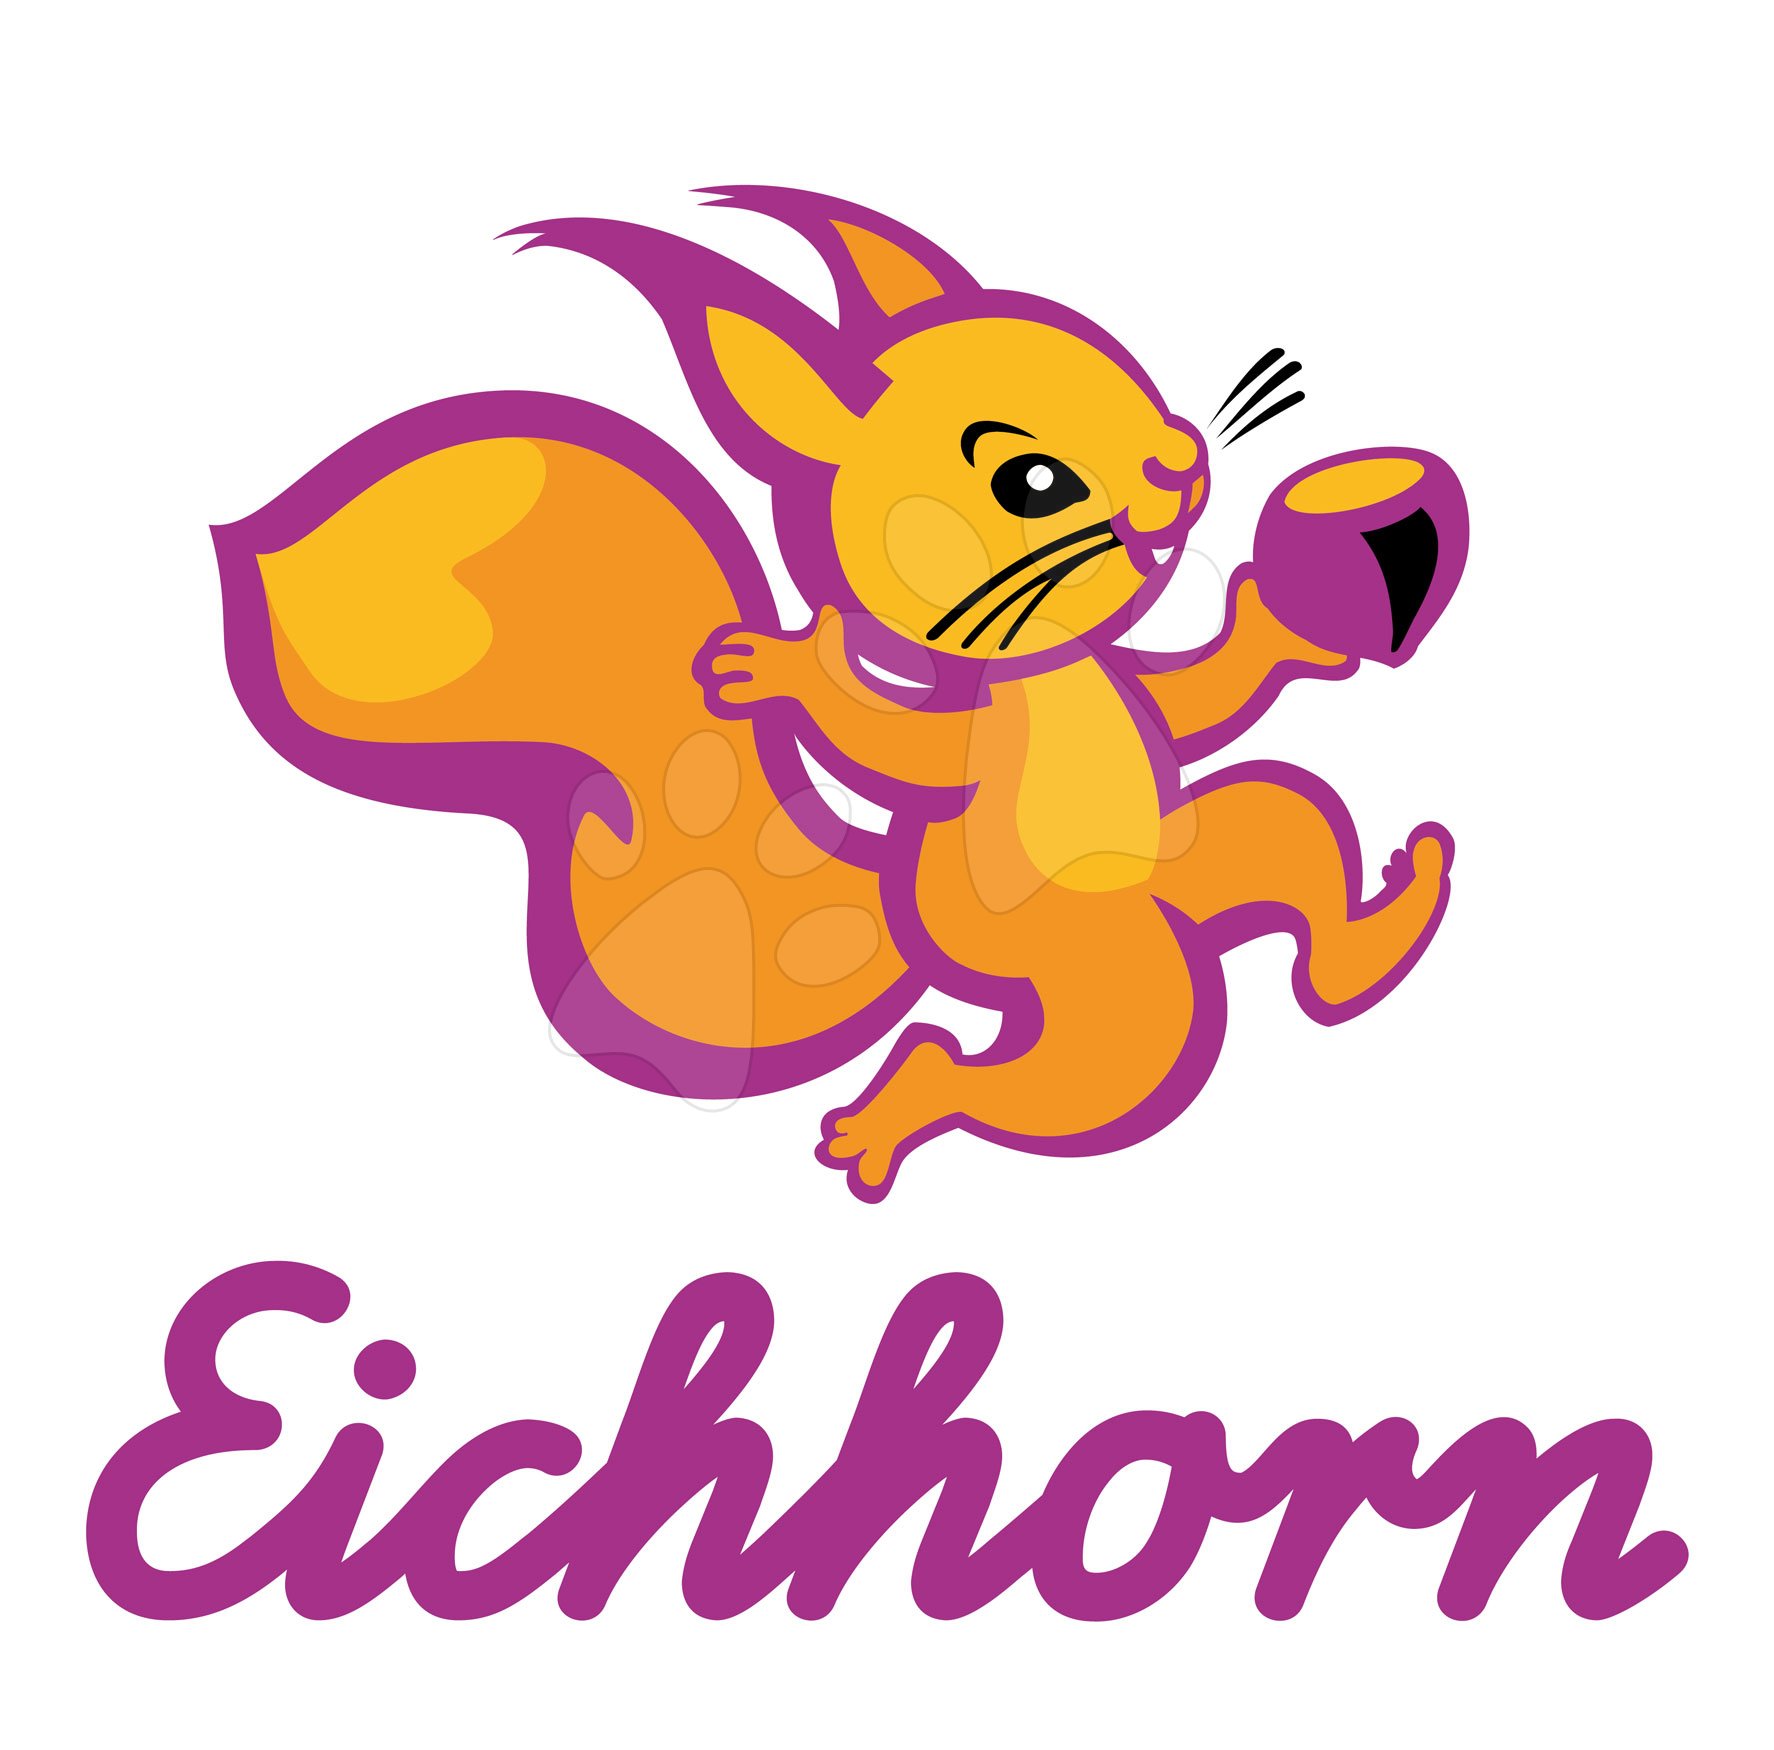 Drevená hrkálka Baby Eichhorn s guličkami a krúžkami od 3 mes